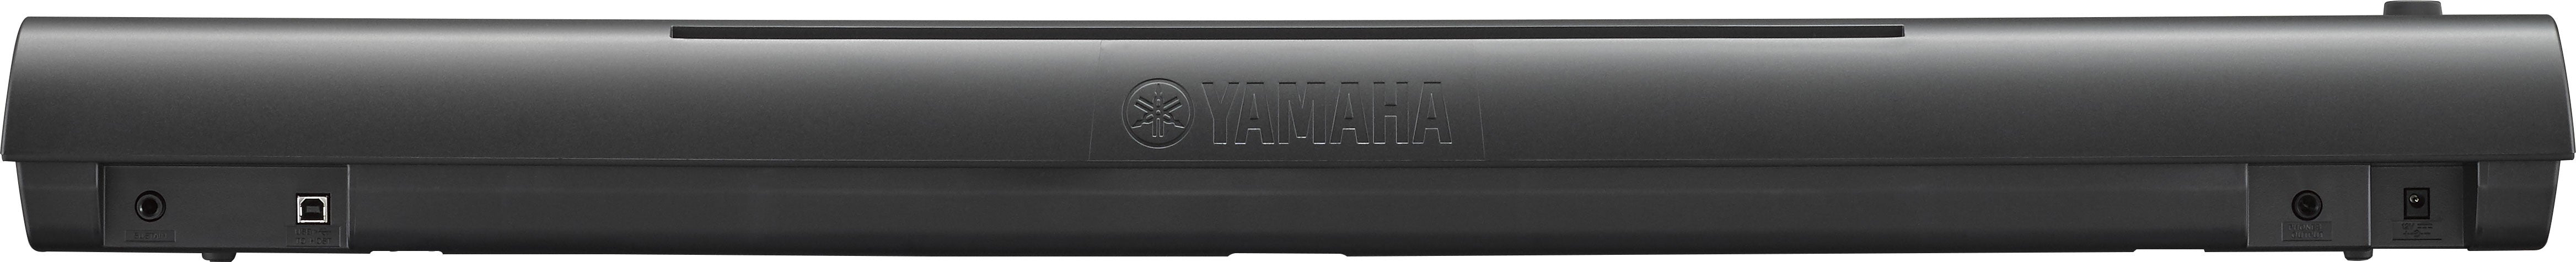 Yamaha NP-12 Keyboard